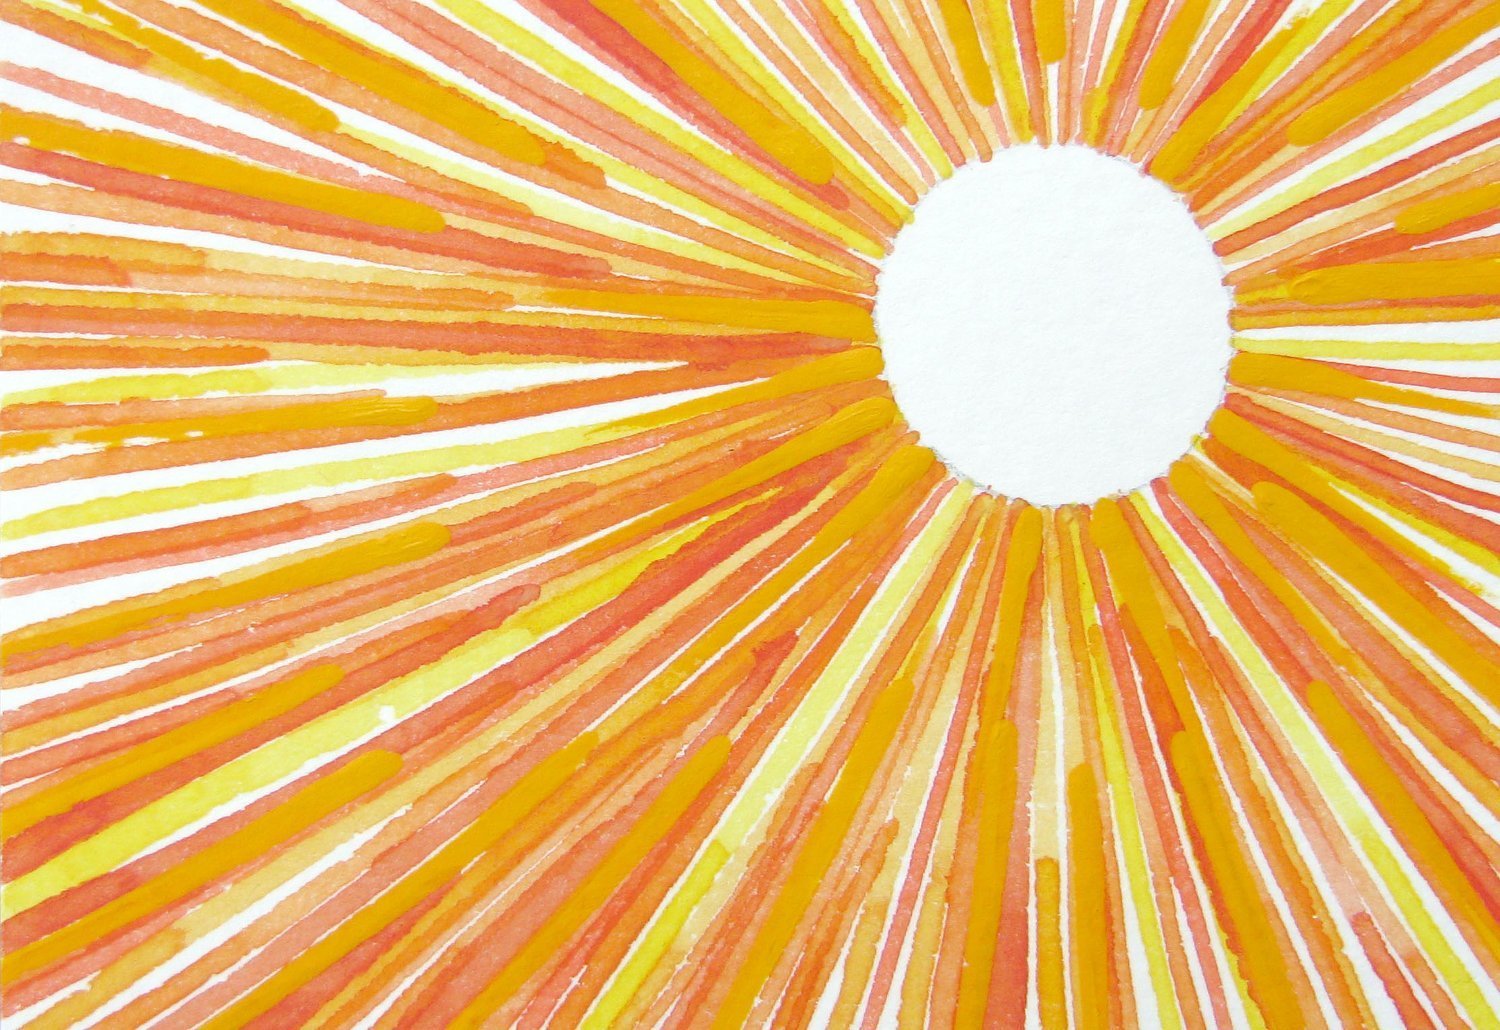 Пленка ярче солнца когда выйдет. Лучи солнца. Солнце рисунок. Желтое солнце. Рисунок солнца с лучами.